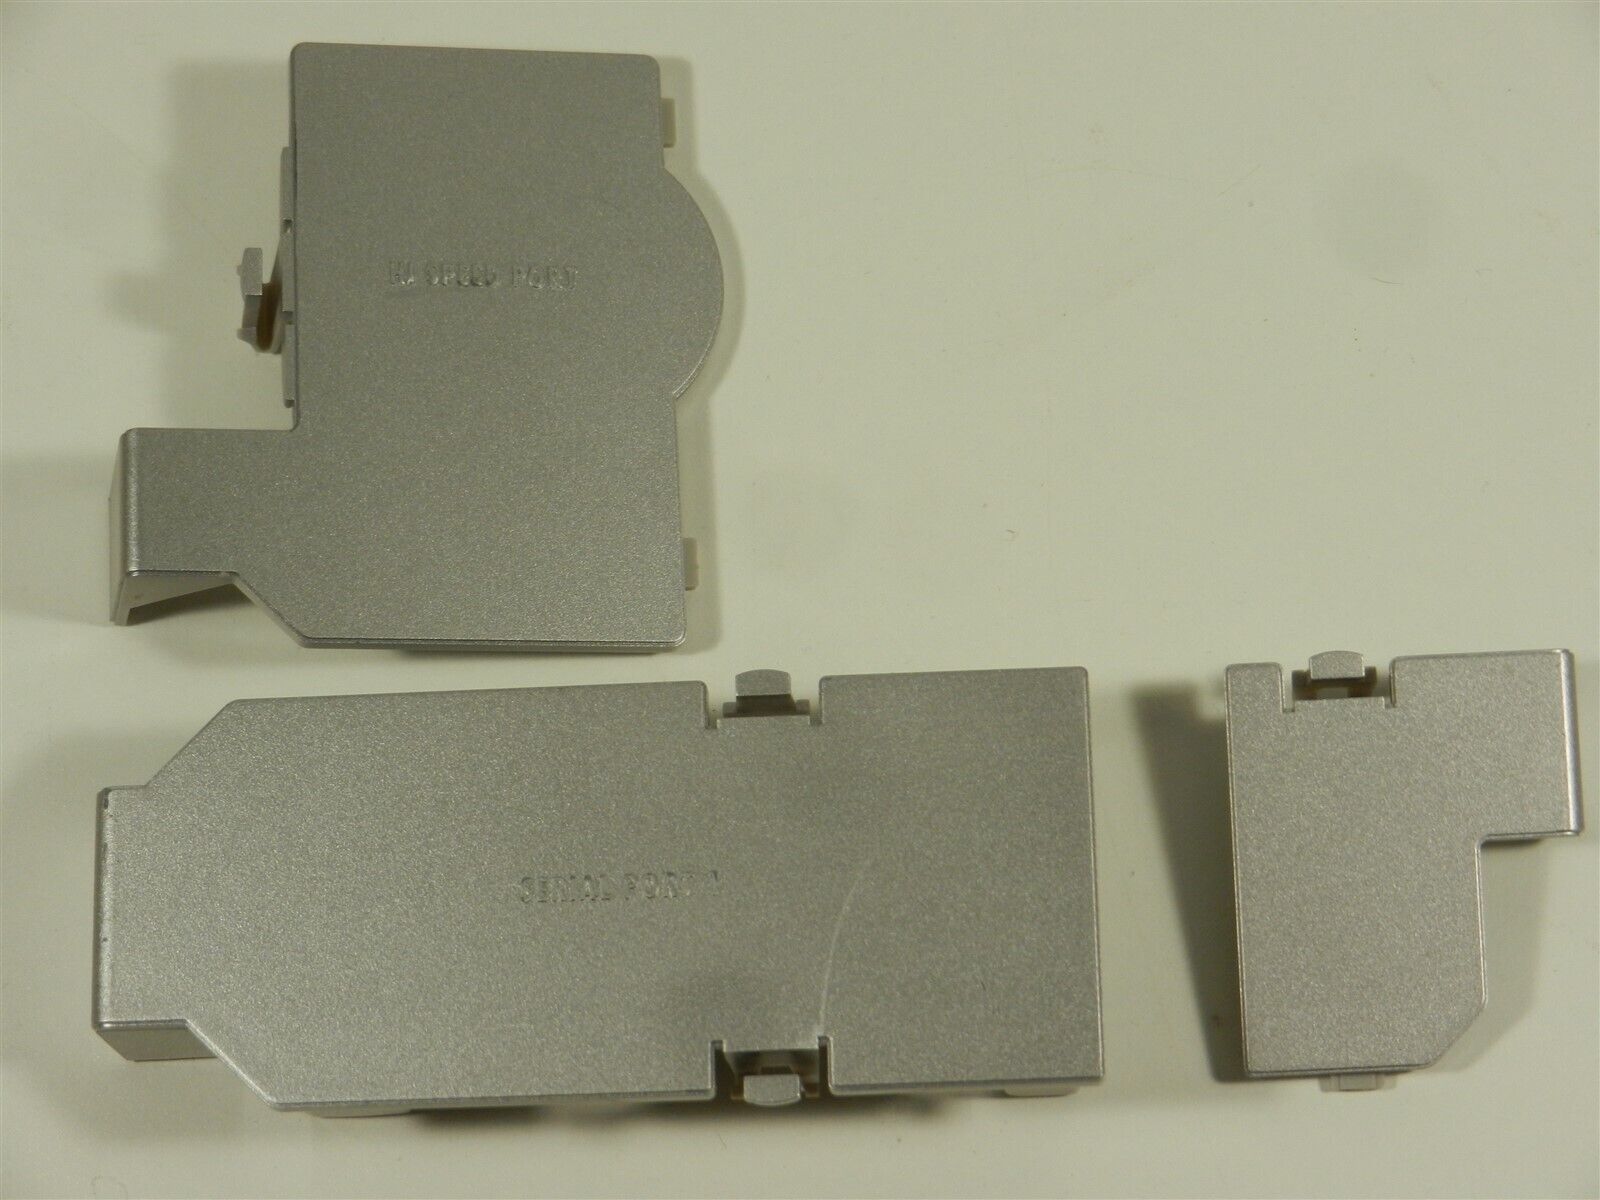 Complete Set of 3 OEM Serial & Hi Speed Port Covers GameCube - Silver/Platinum Nintendo